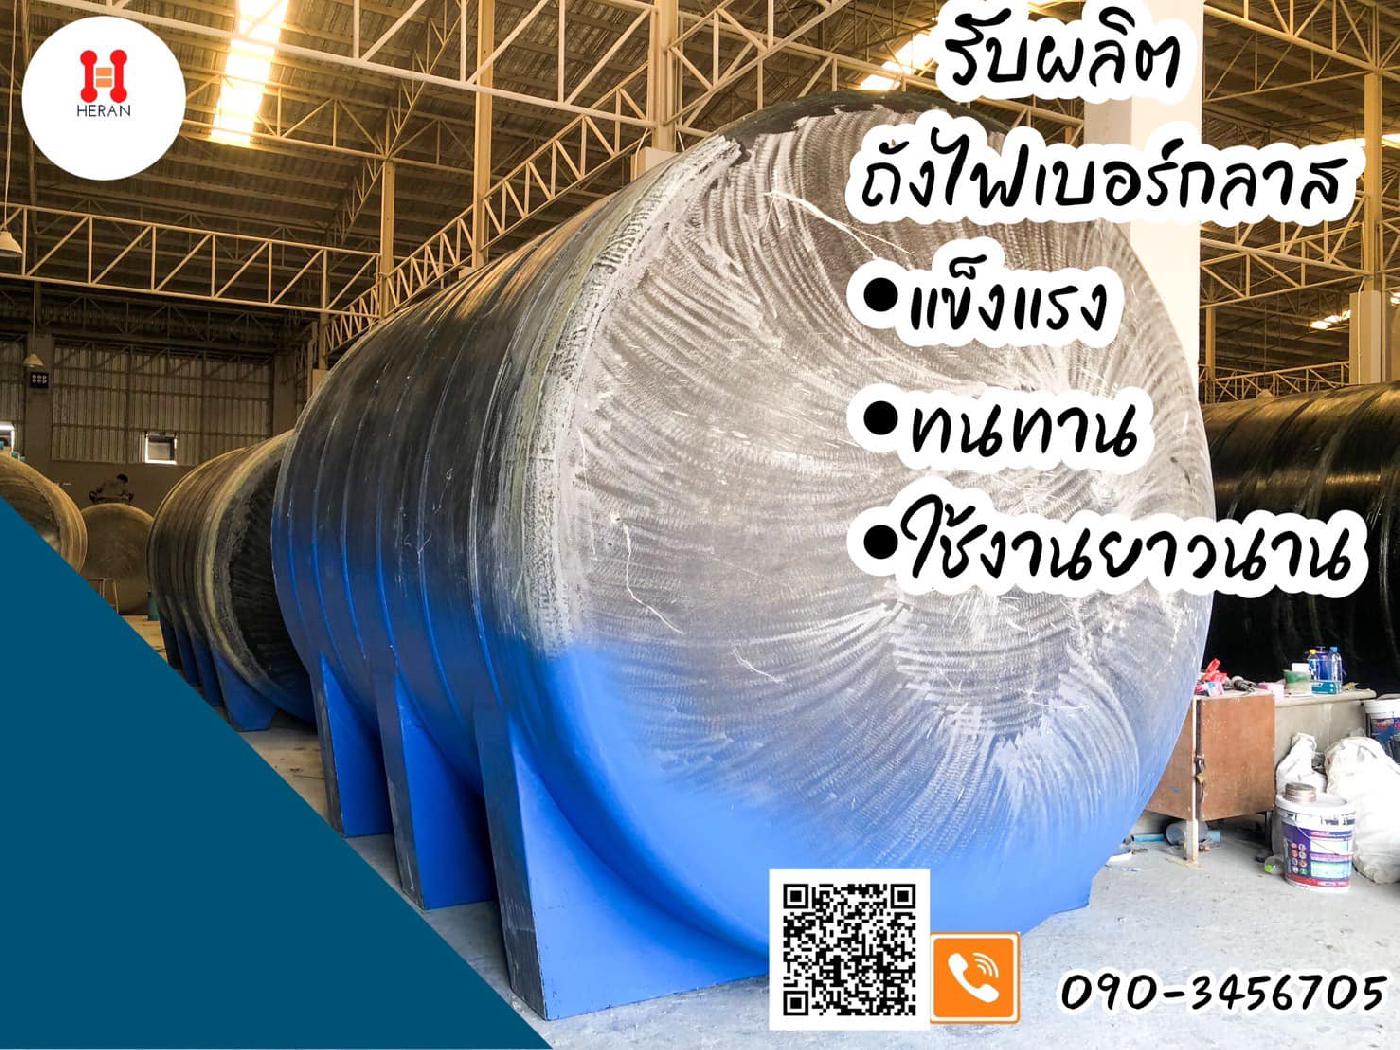 Production of fiberglass tanks of 2,000 liters - 100,000 liters